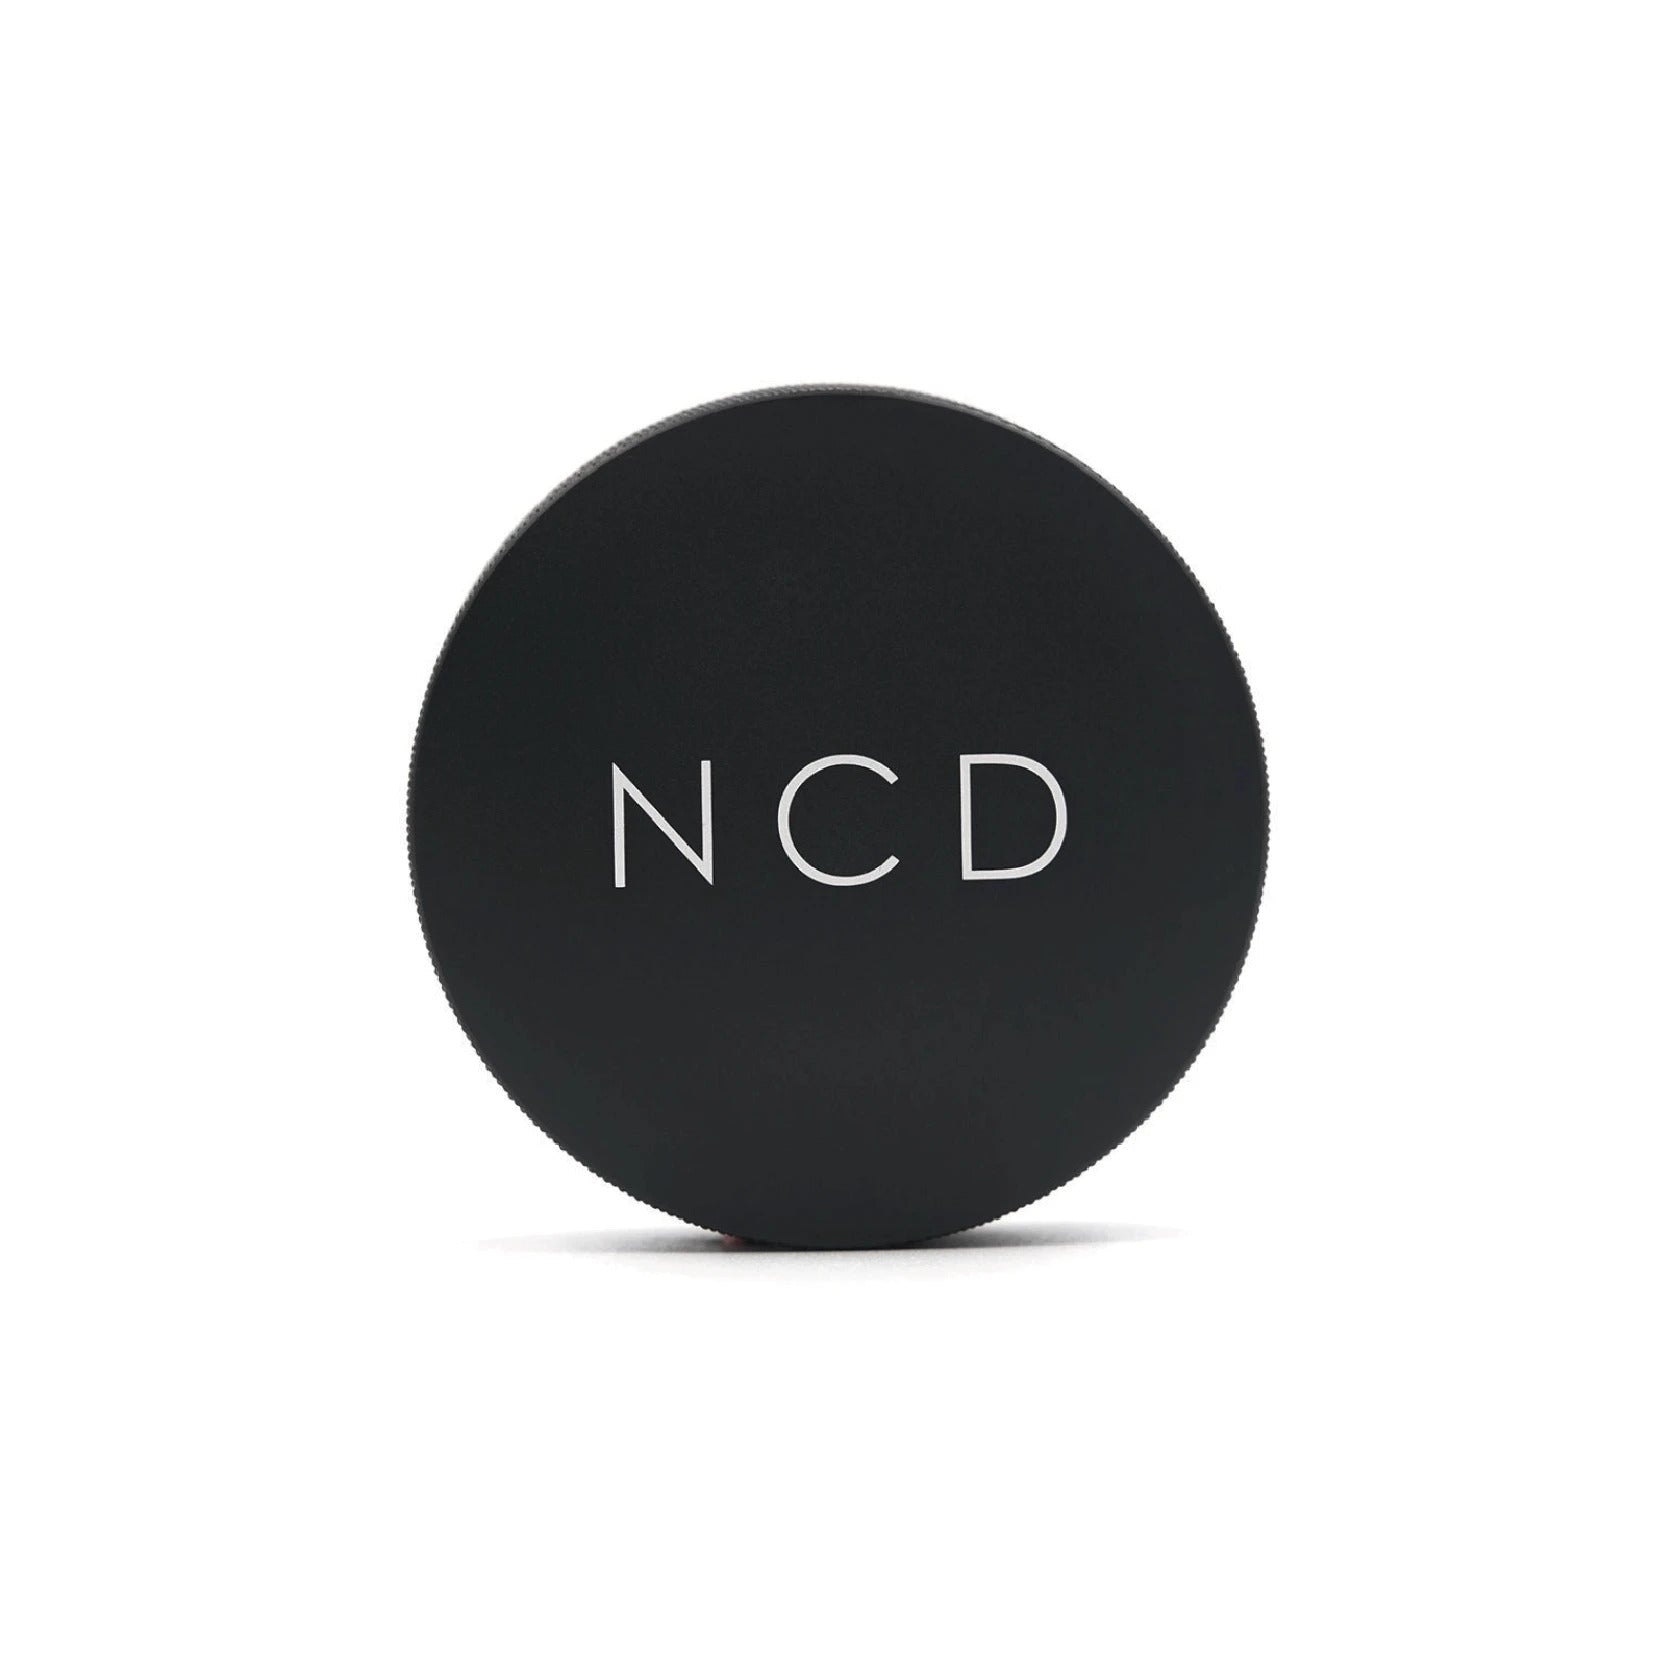 Nucleus Coffee Distributor NCD (58.5mm)